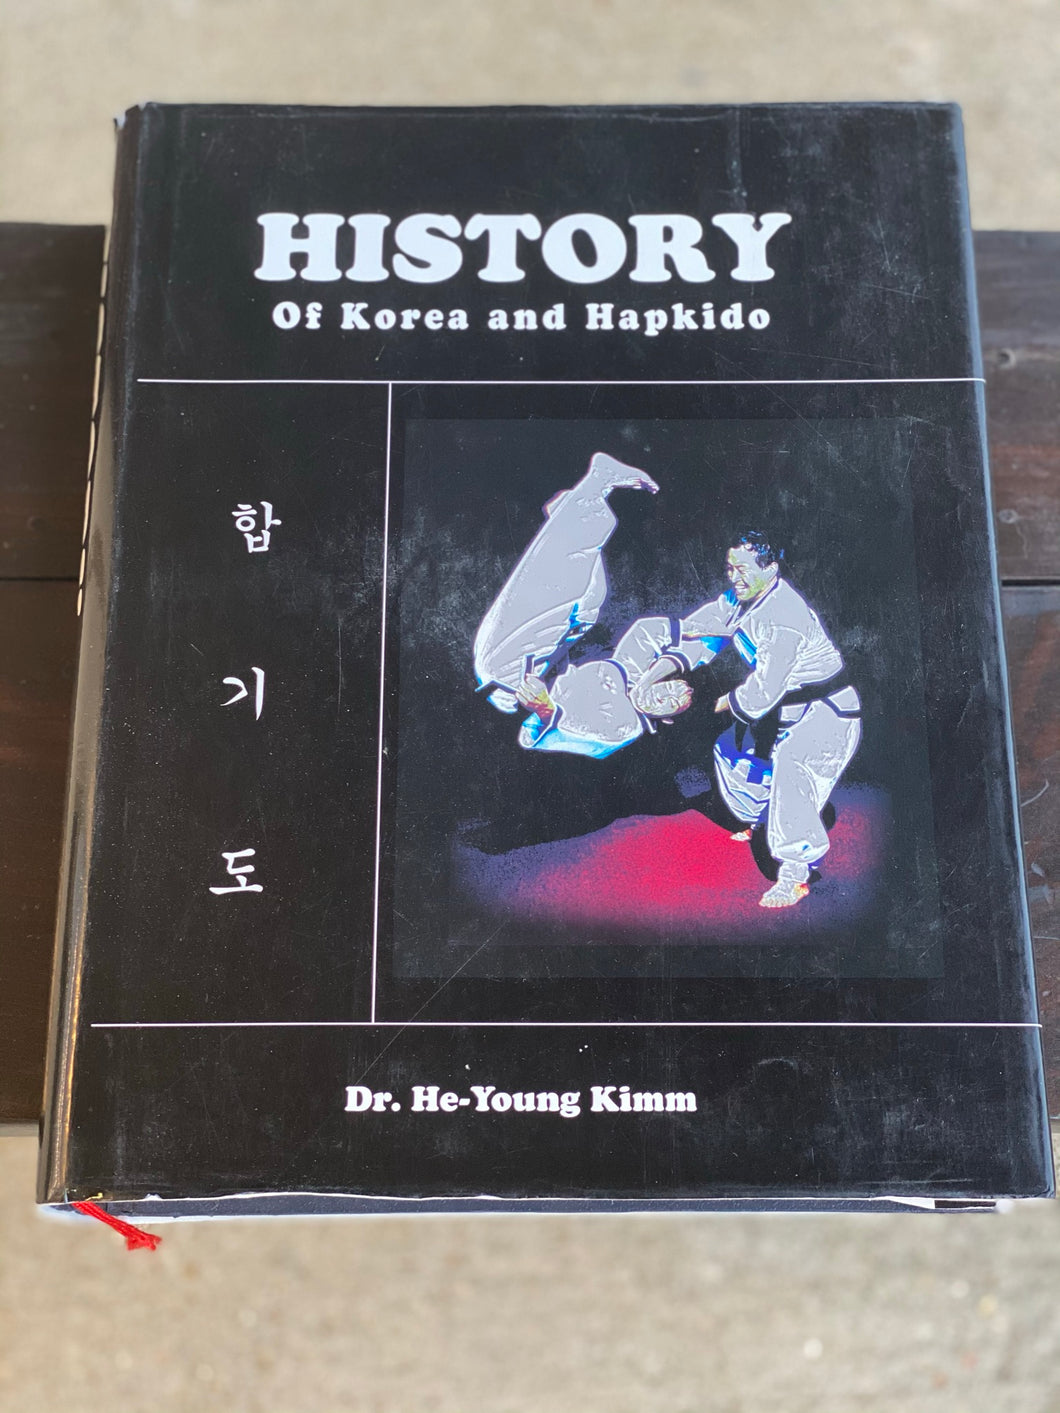 History of Korea and Hapkido